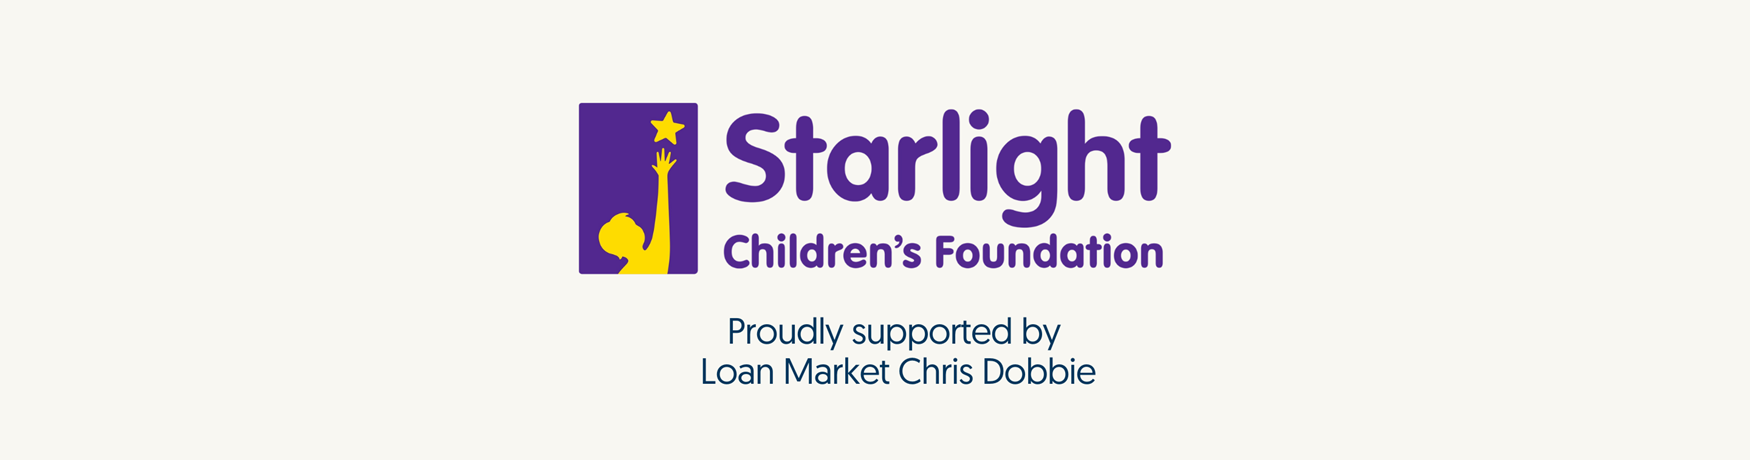 Starlight Childrens Foundation x Loan Market Chris Dobbie